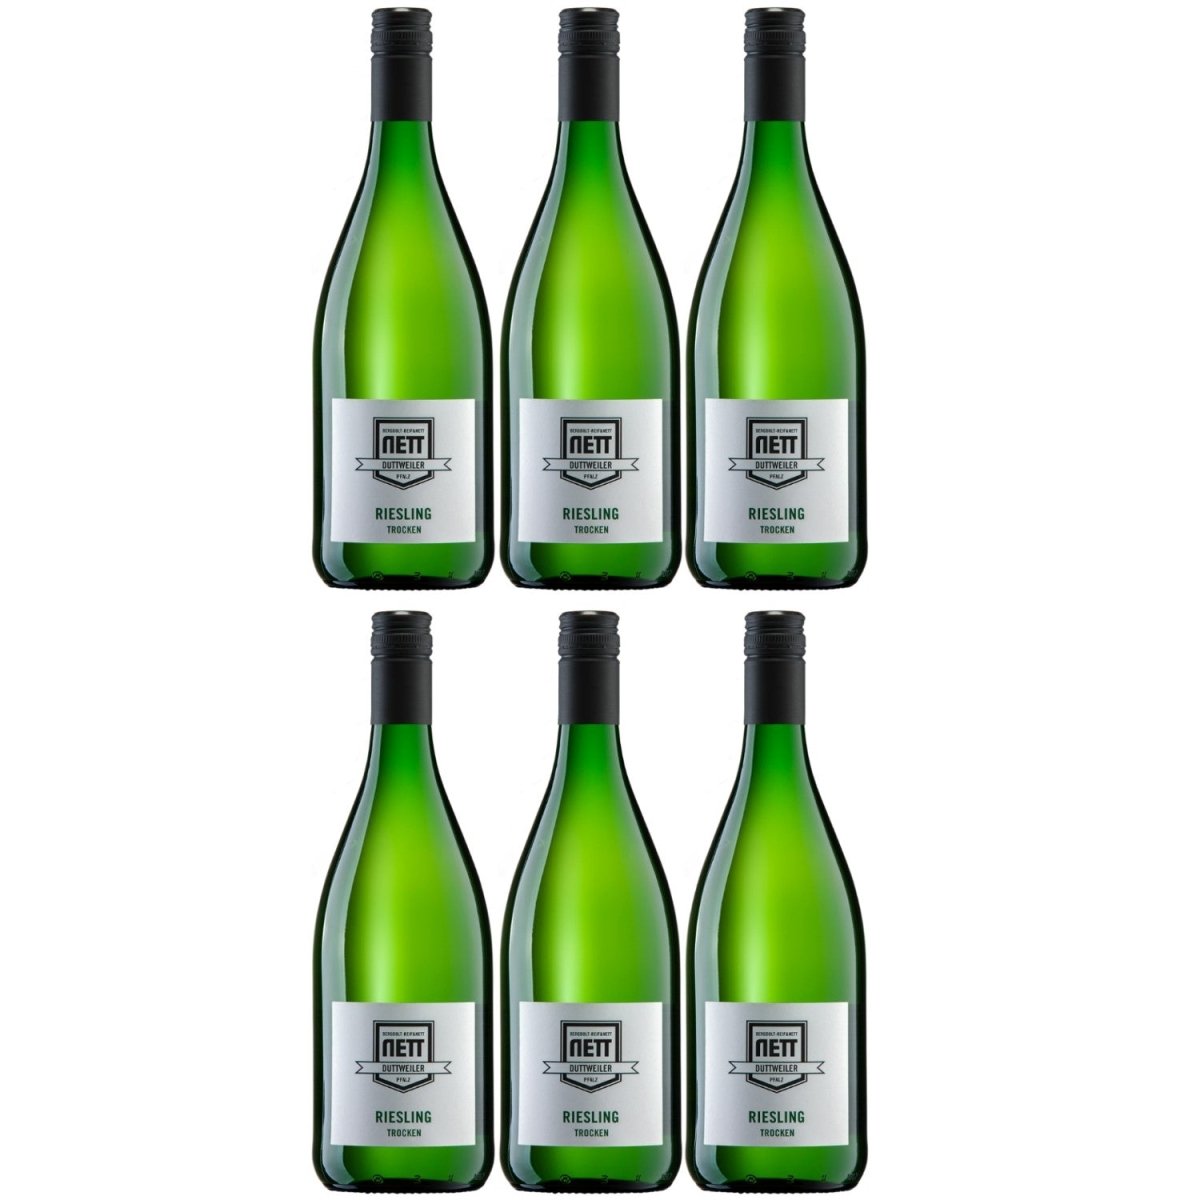 Bergdolt-Reif & Nett Creation Riesling Weißwein Wein trocken Pfalz (6 x 0,75l) - Versanel -